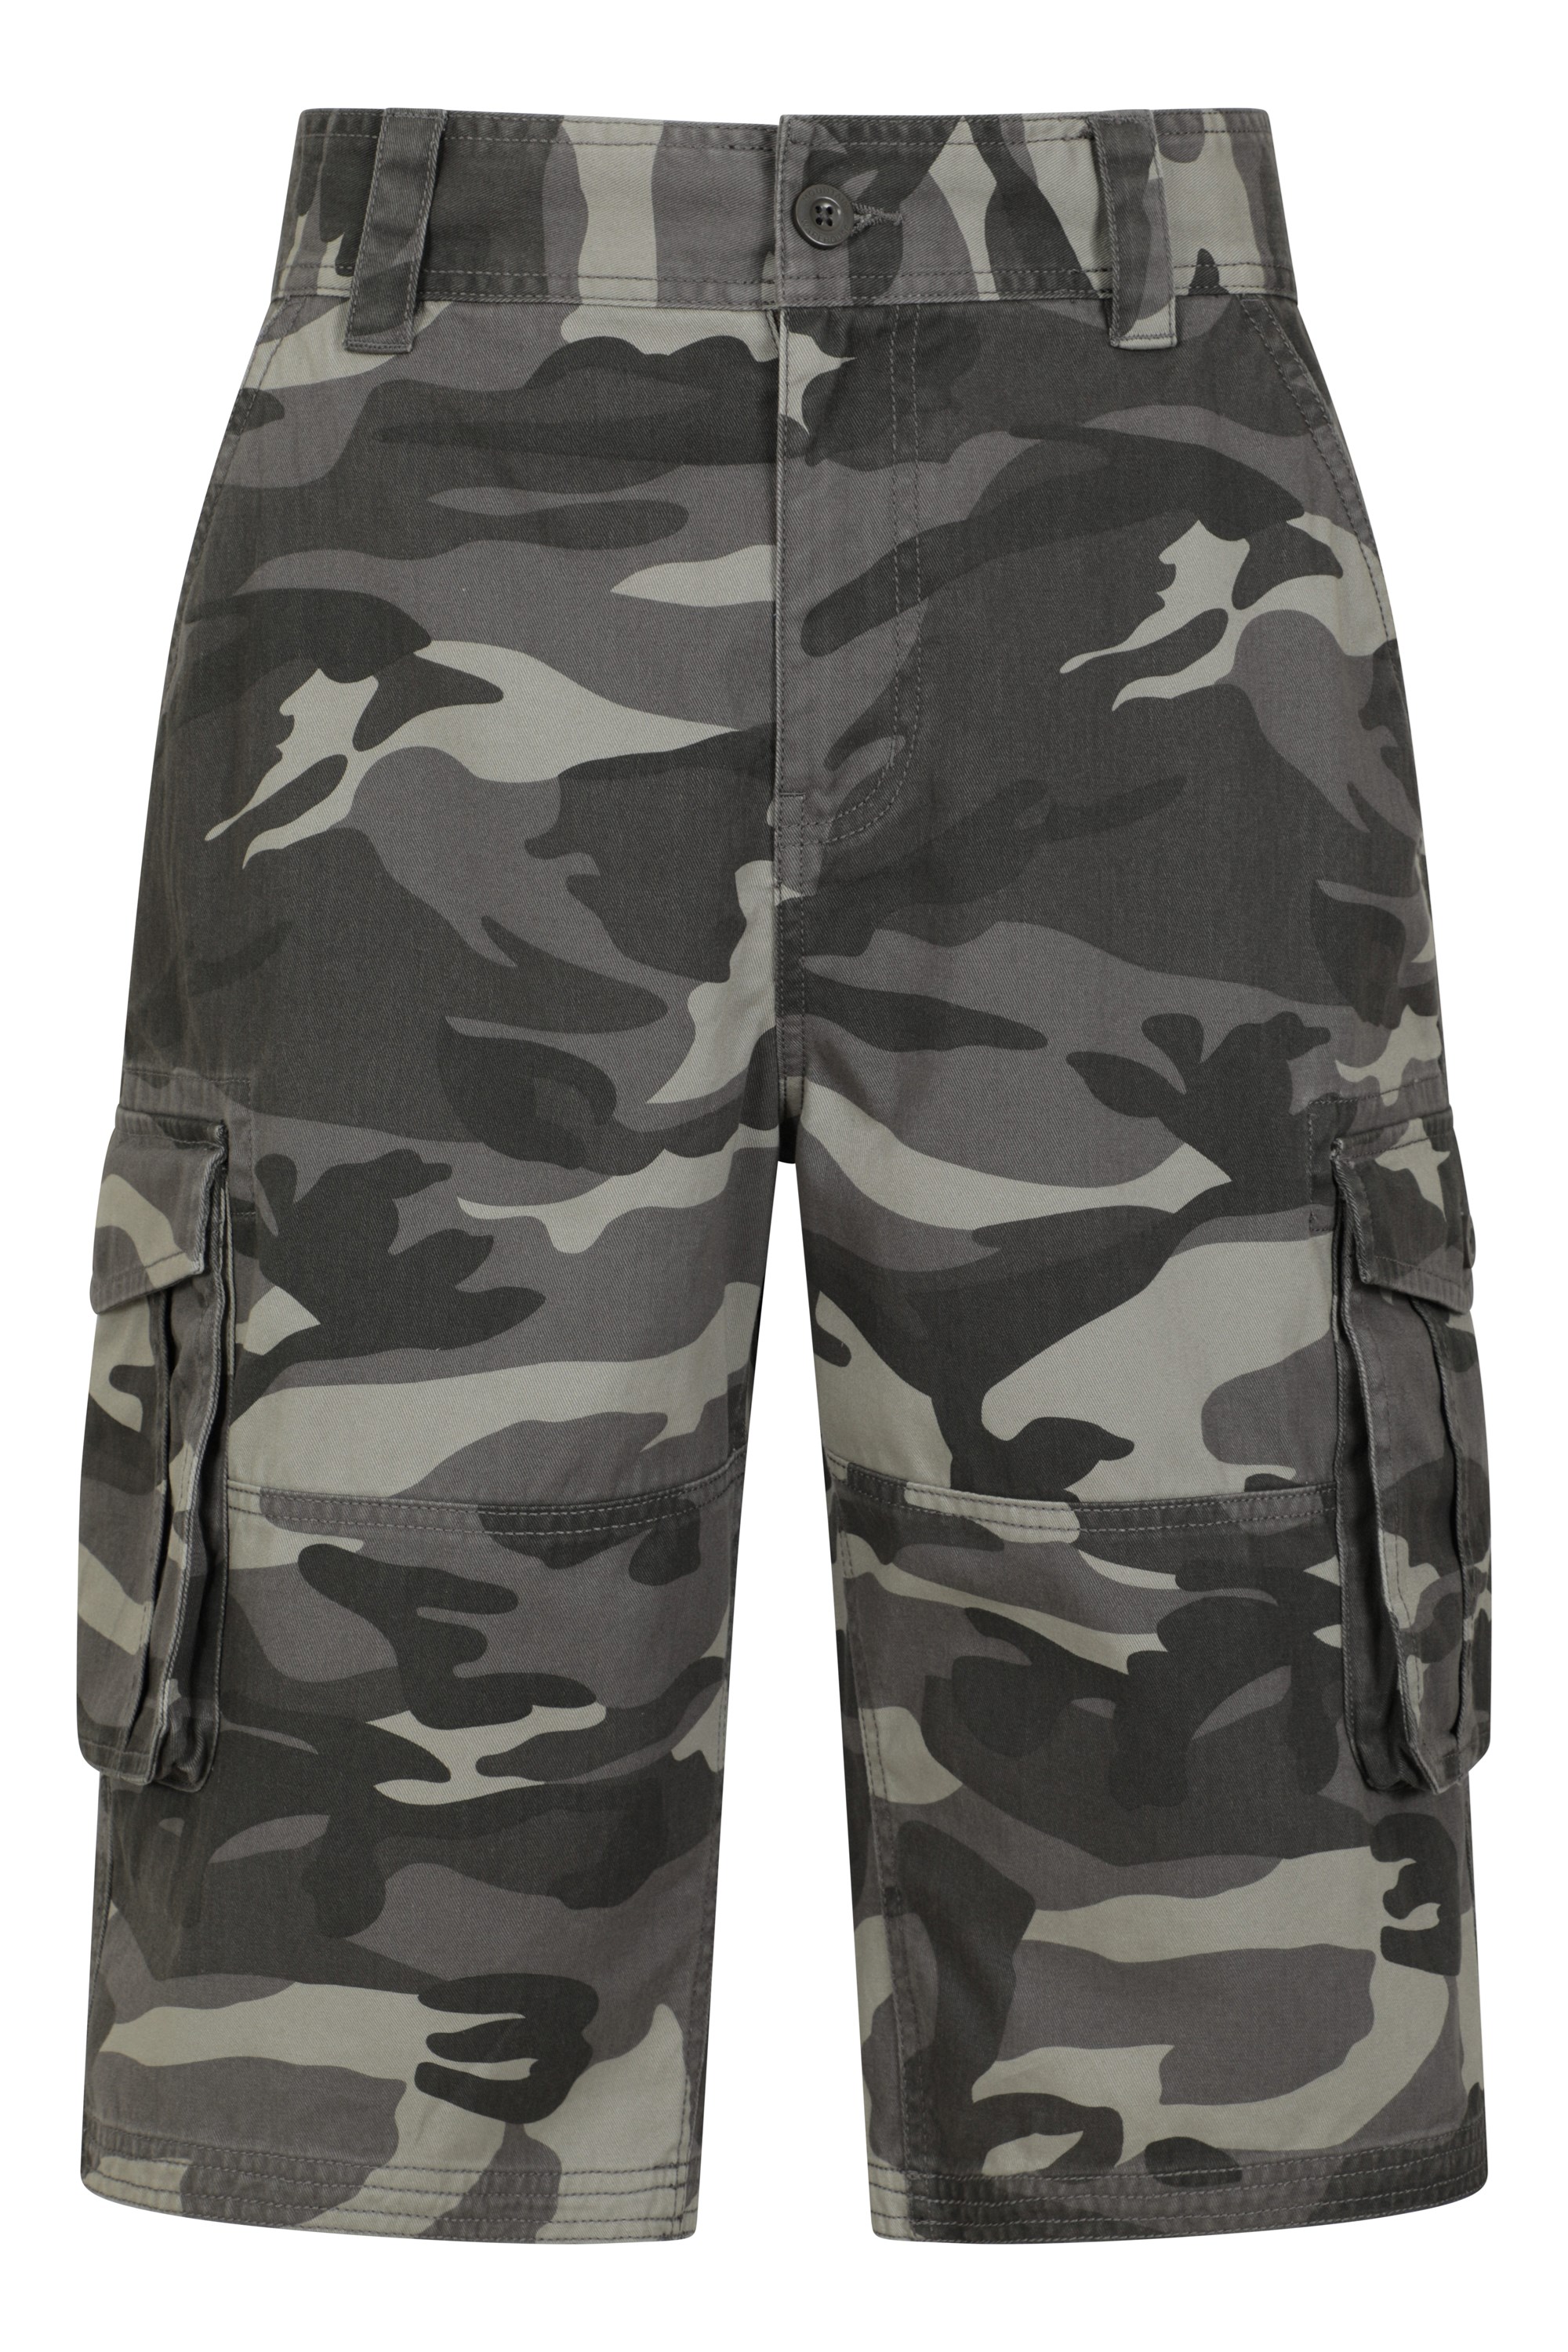 AOYOG Men's Camo Cargo Shorts Relaxed Fit Multi-Pocket Outdoor Camouflage  Cargo Shorts Cotton